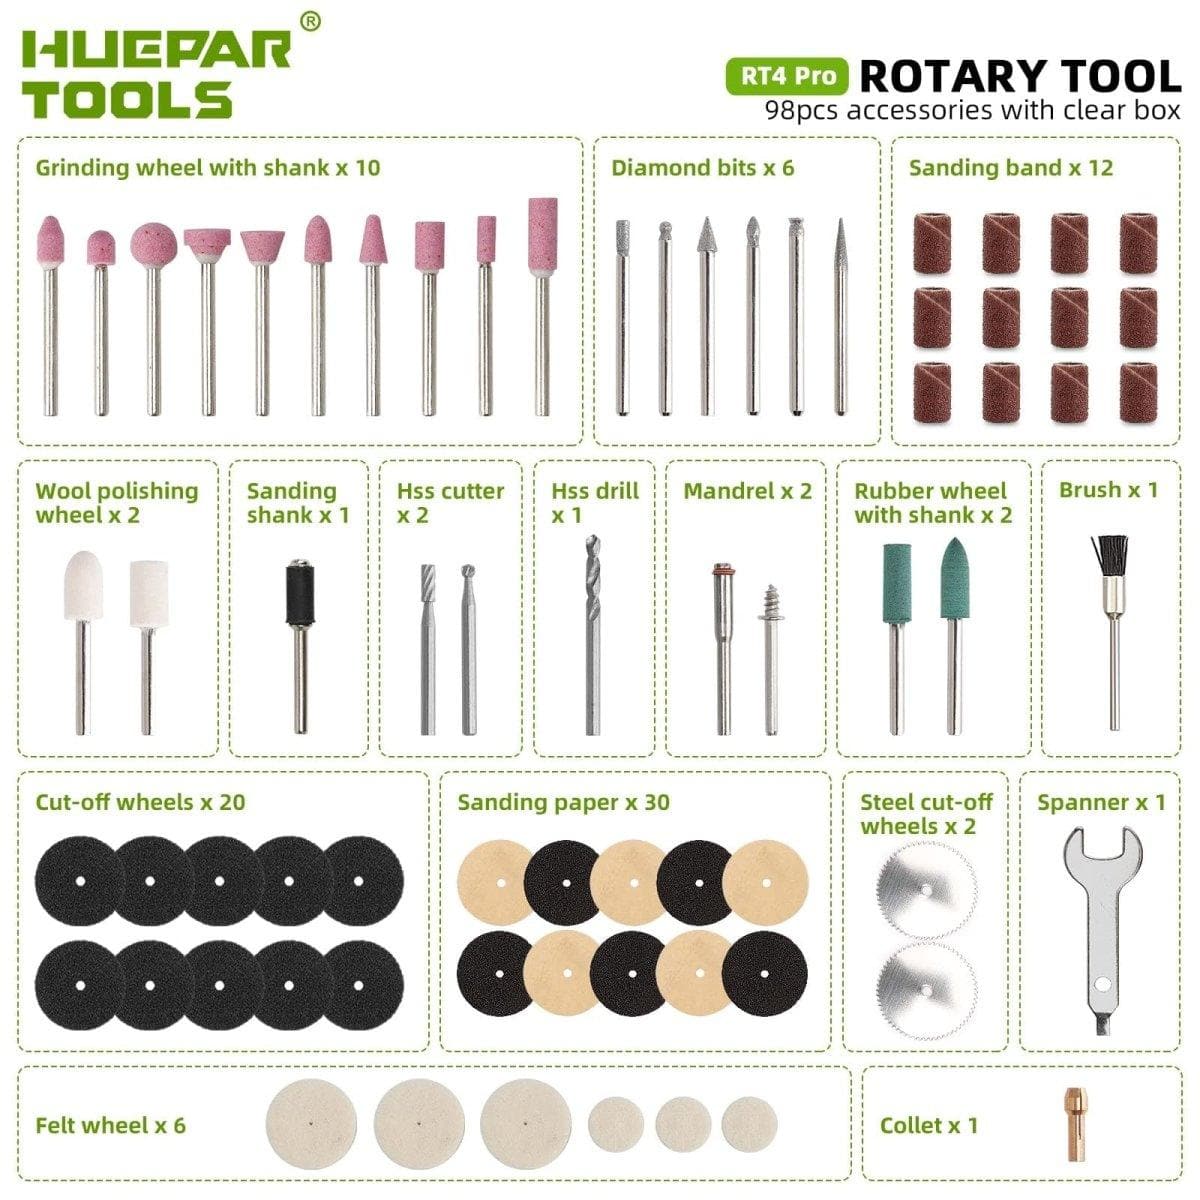 Huepar RT4 Basic Mini Power Rotary Tool with free shipping by HUEPAR US3